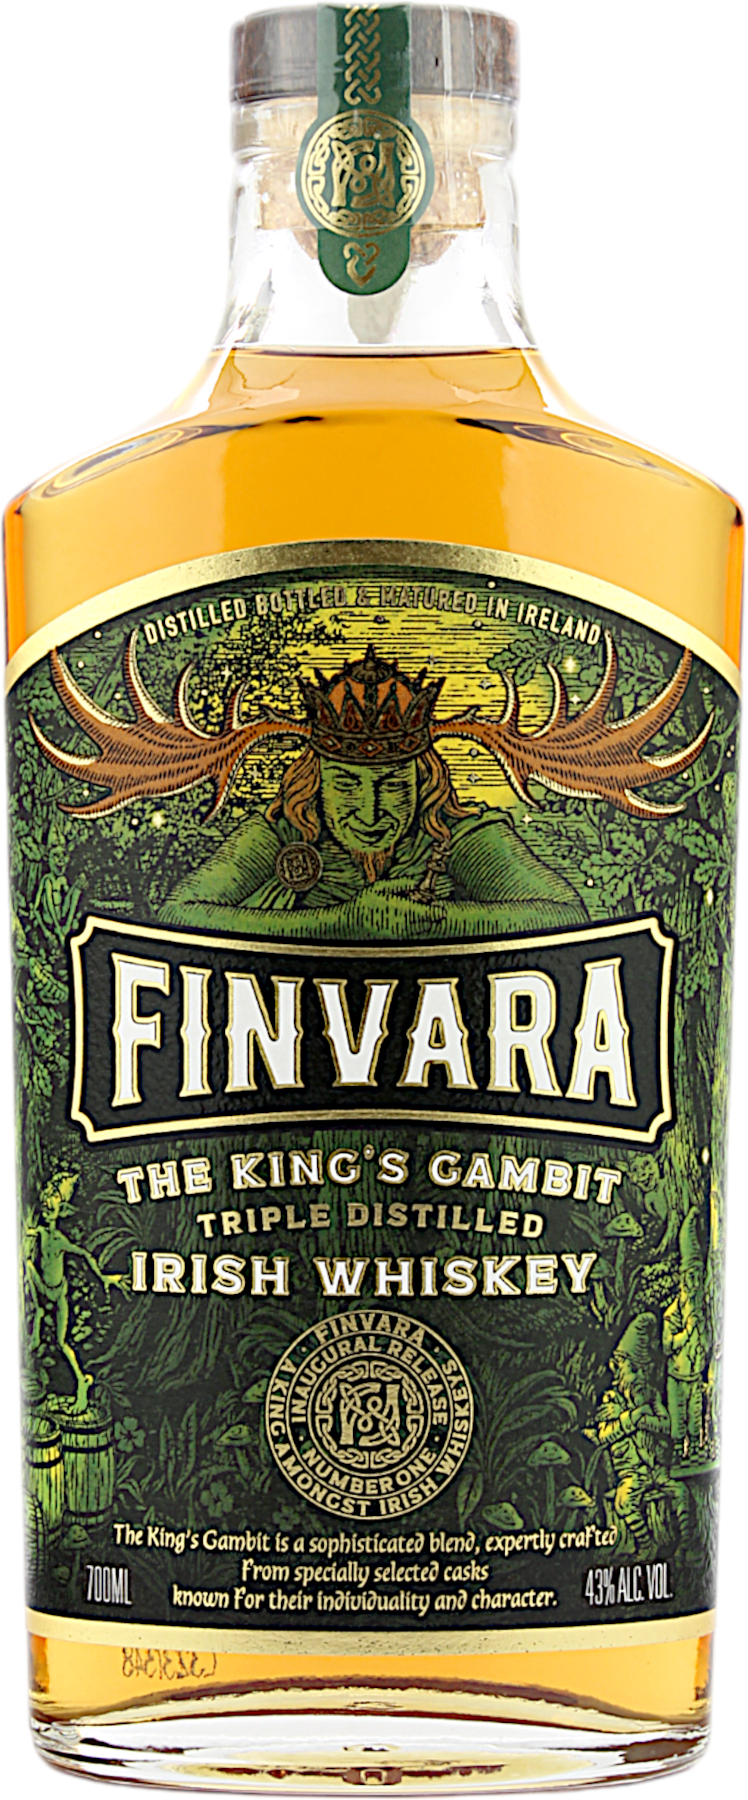 Finvara Irish Whiskey The Kings Gambit 43.0% 0,7l